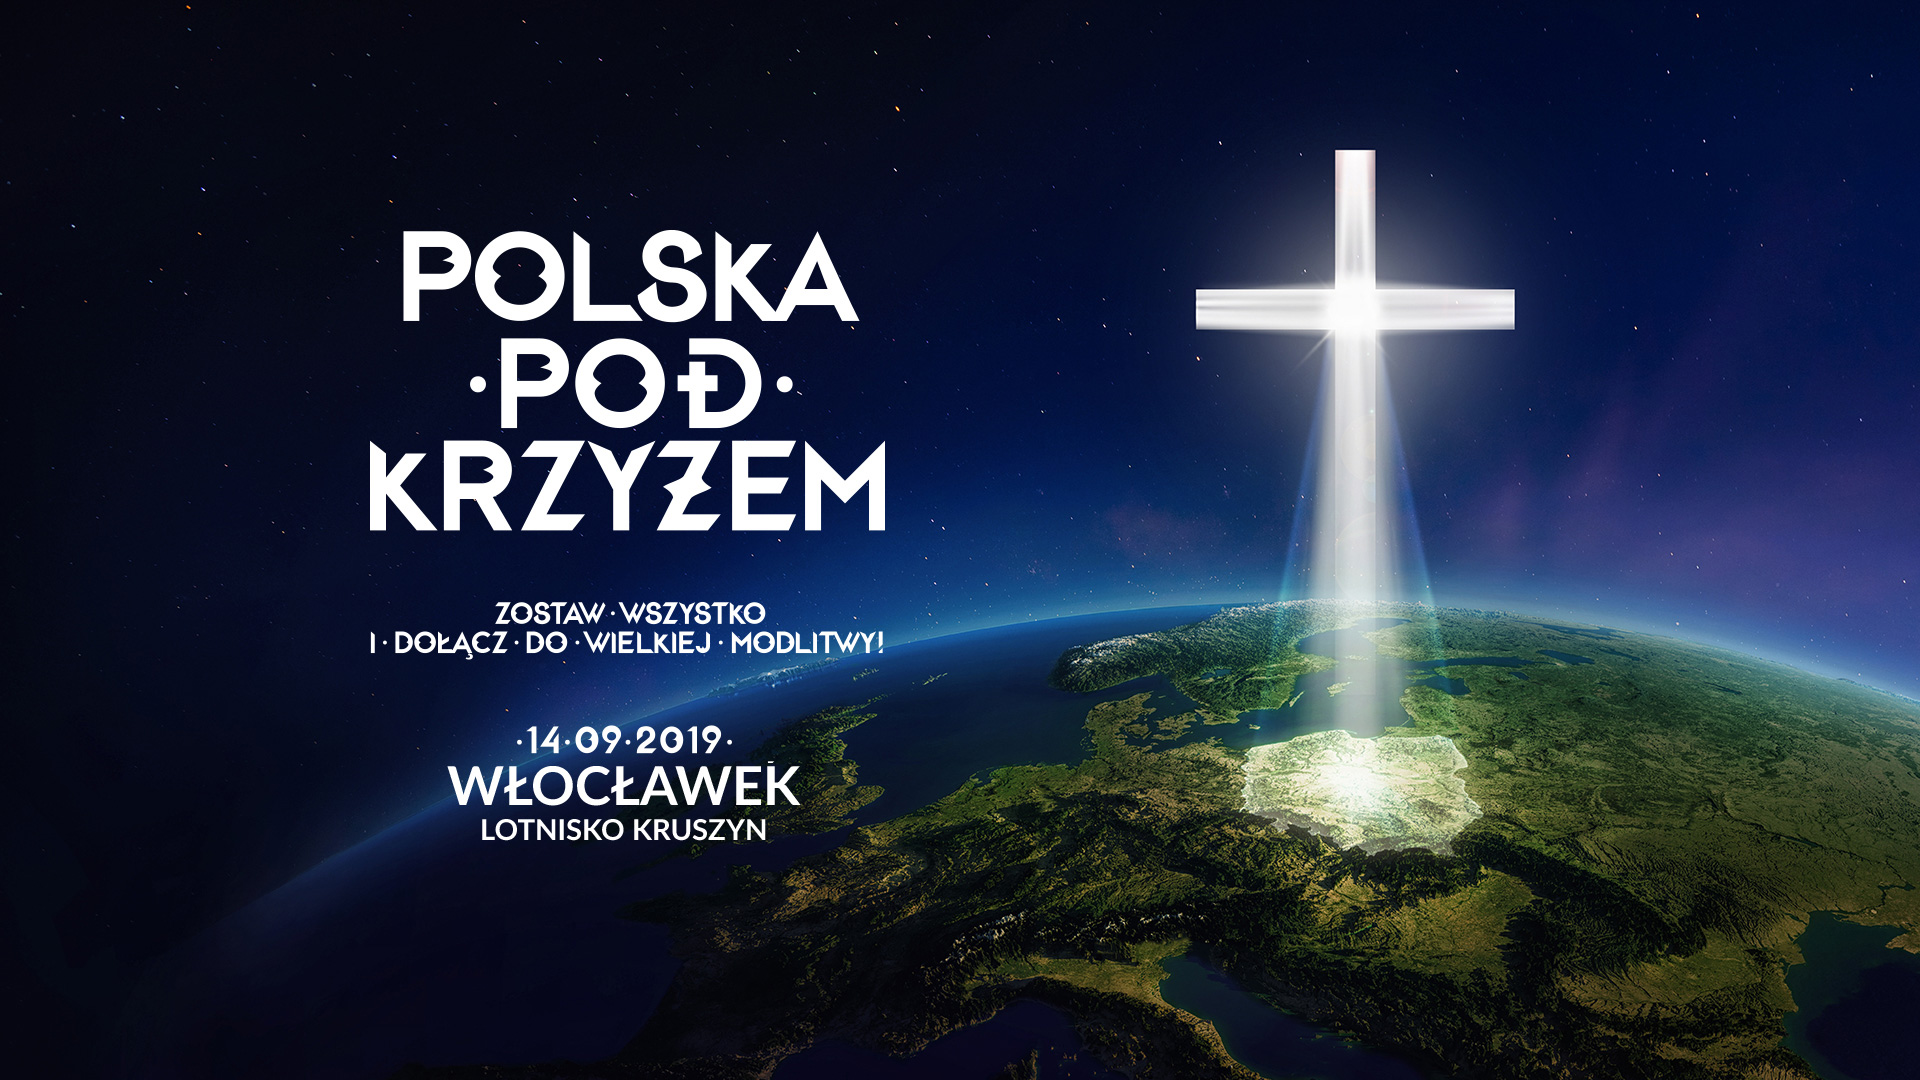 Znalezione obrazy dla zapytania polska pod krzyÅ¼em